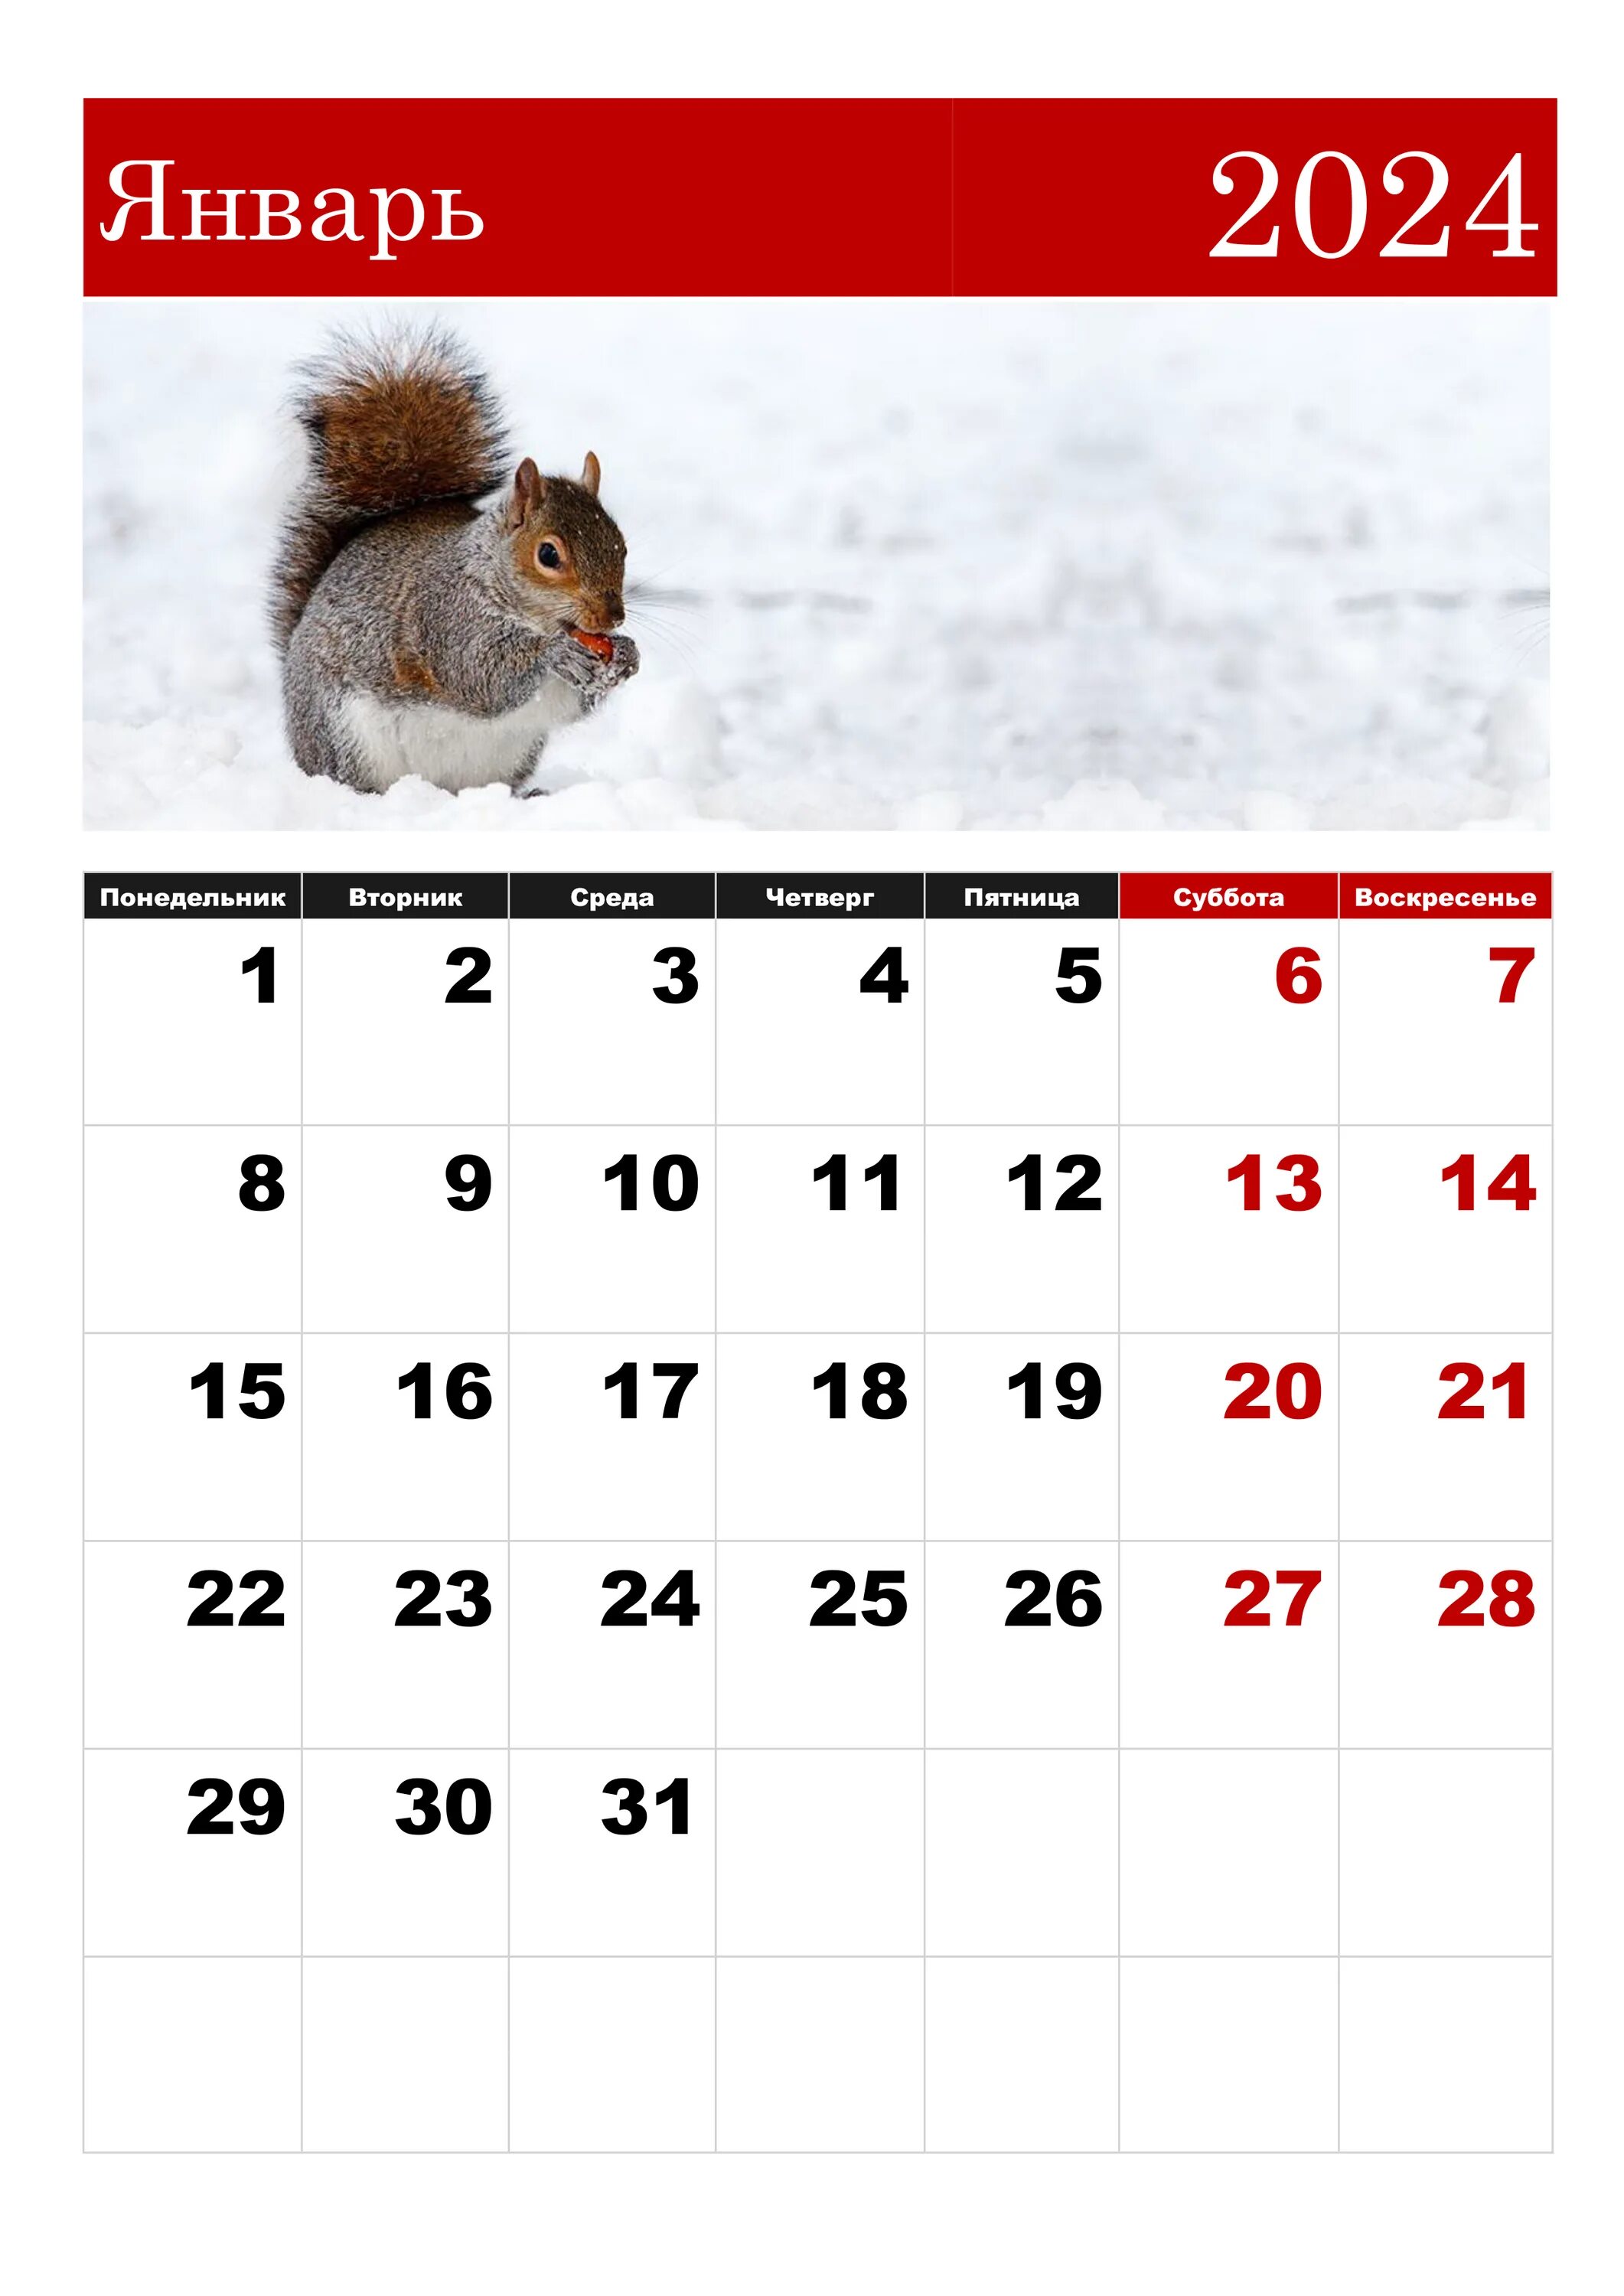 Календарная январь 2024. ЯНВАРЬРЬ 2024. Календарь январь. Календарь на январь 2024 года. 15 января 2024 какой